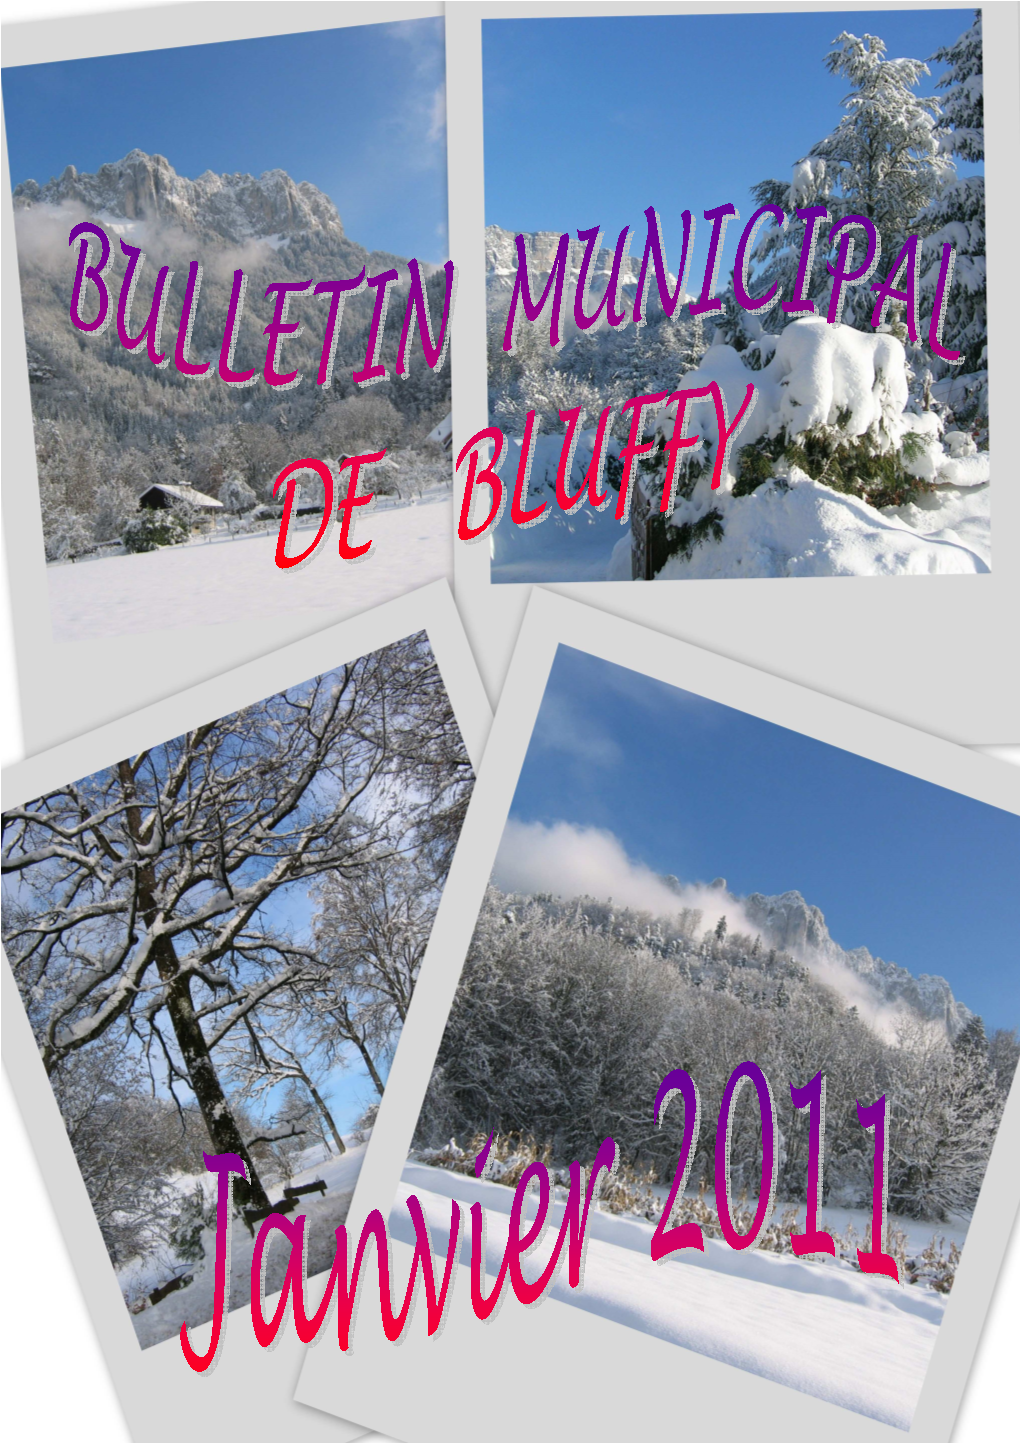 Bulletin Ianvier 2011.Pub